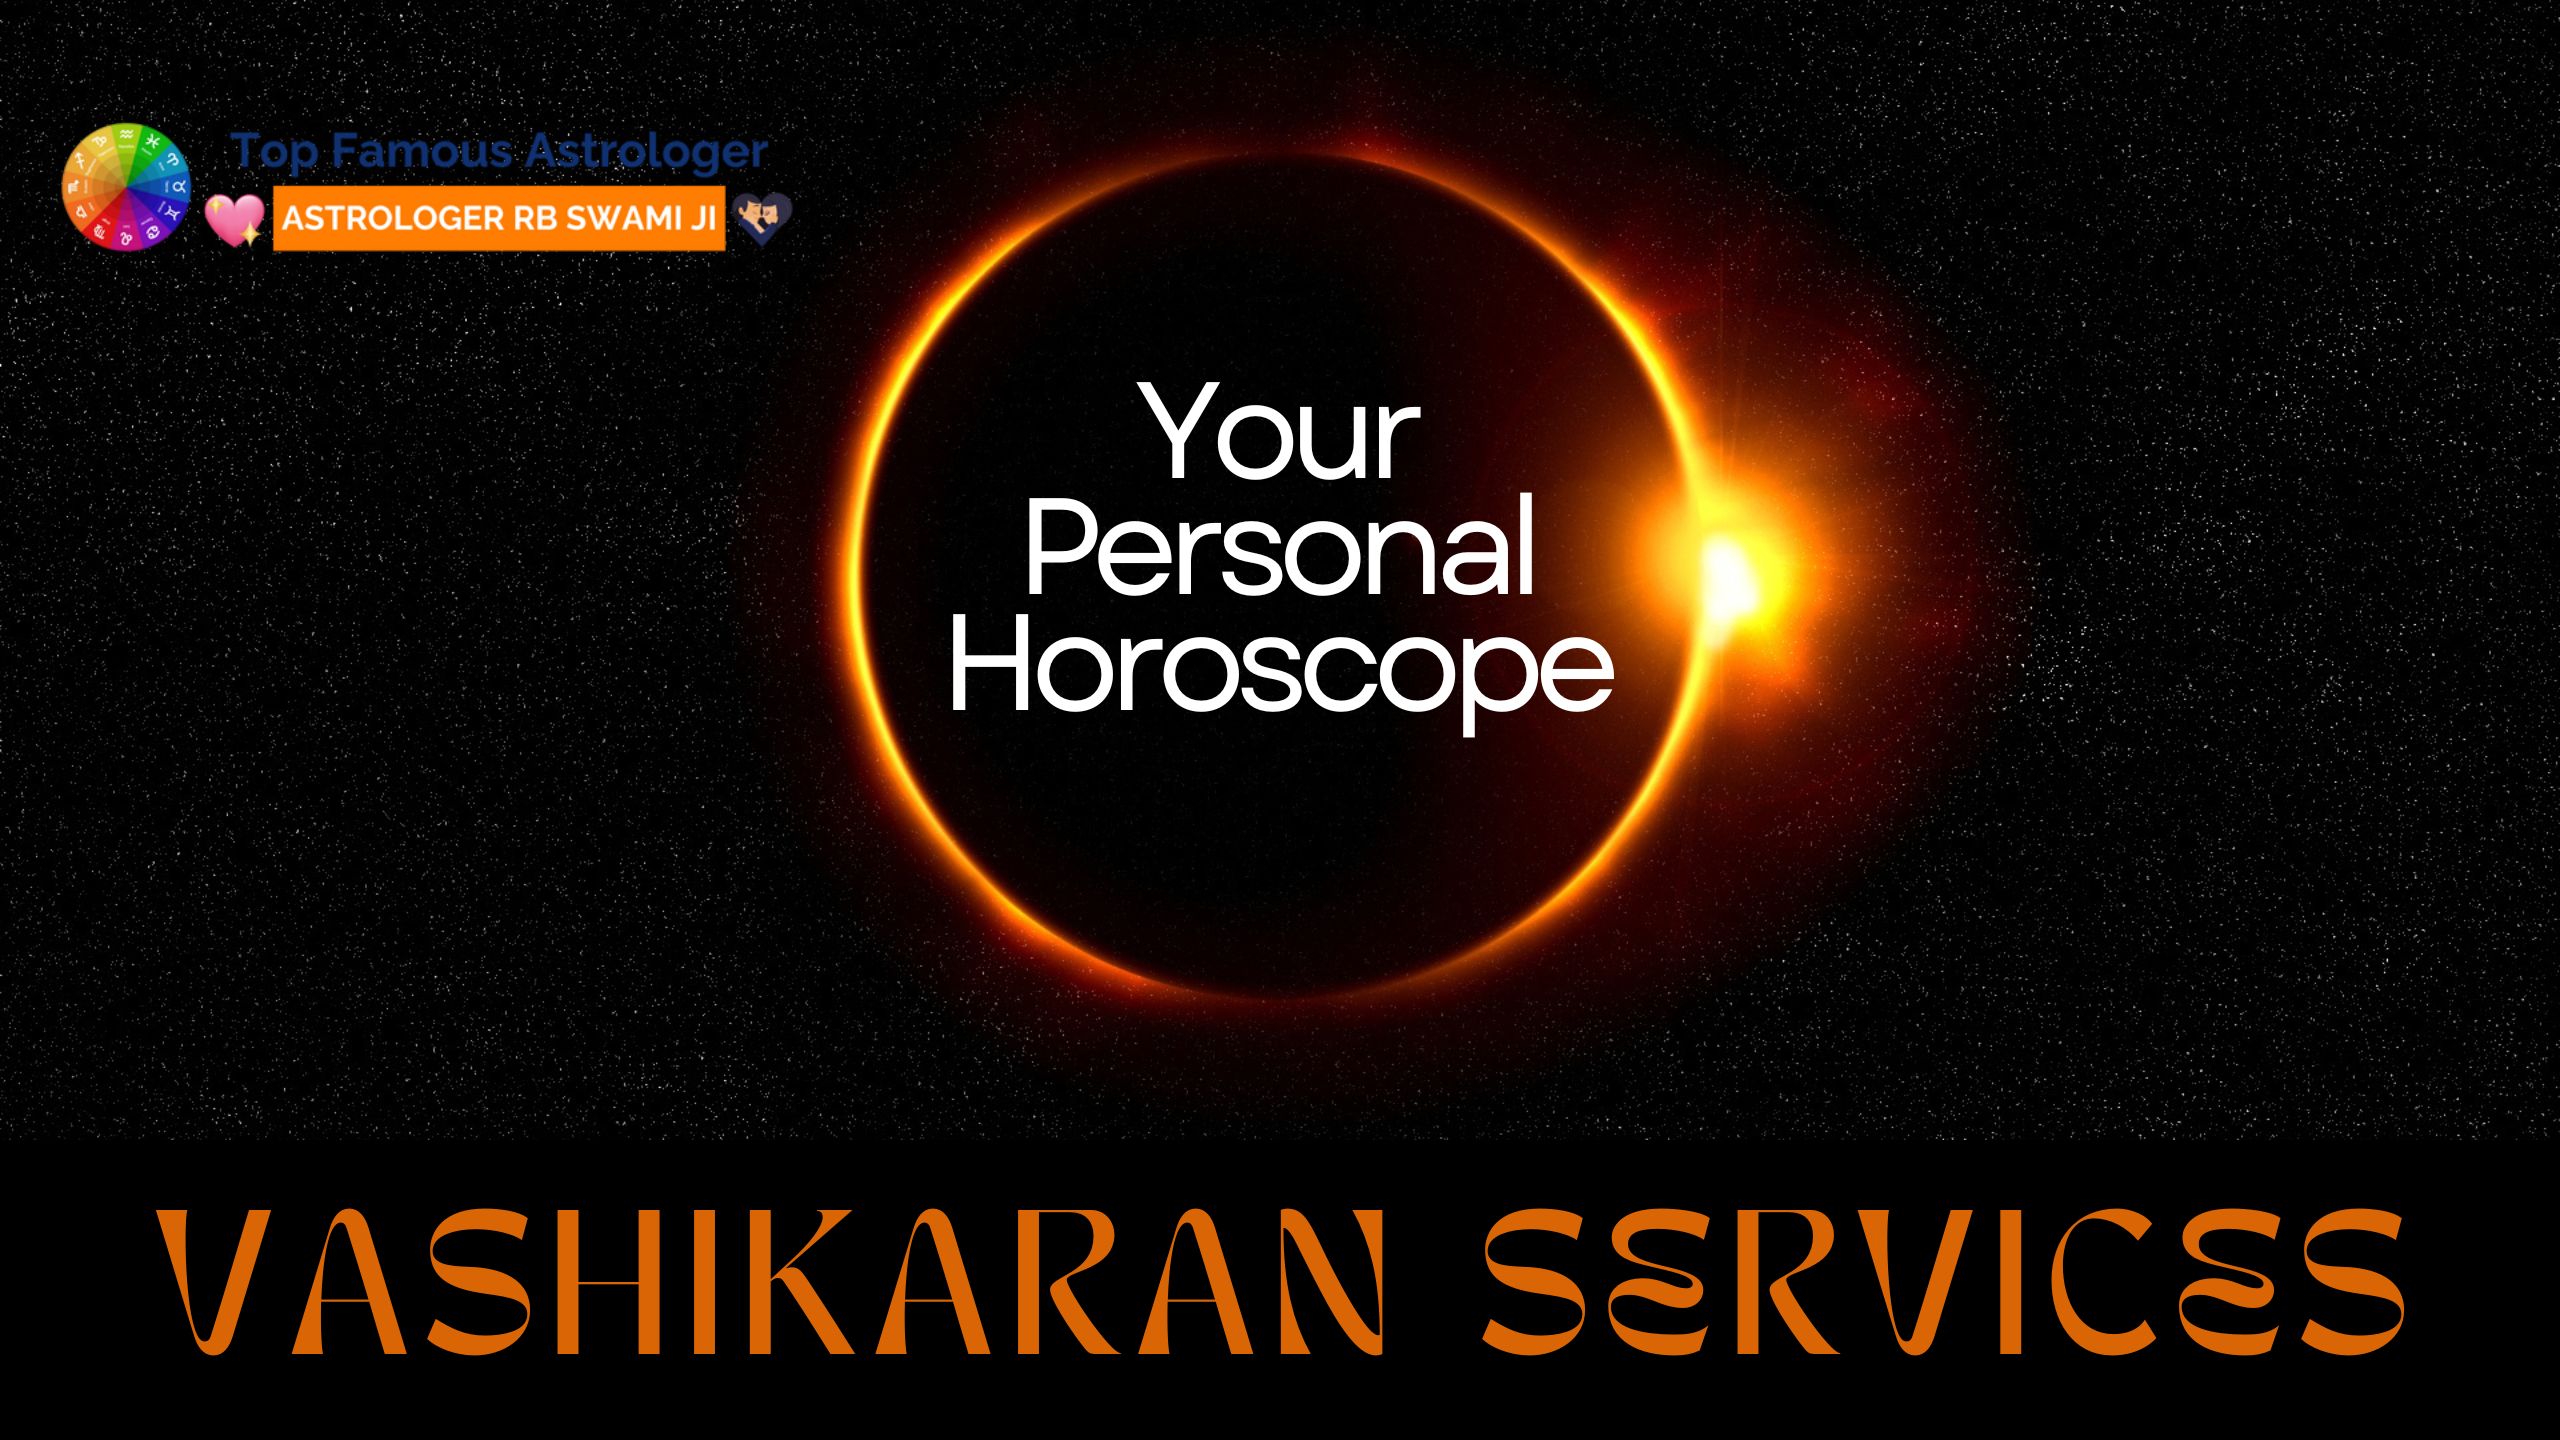 Vashikaran services from the people seeking true love in life - Top Famous Astrologer RB Swami Ji